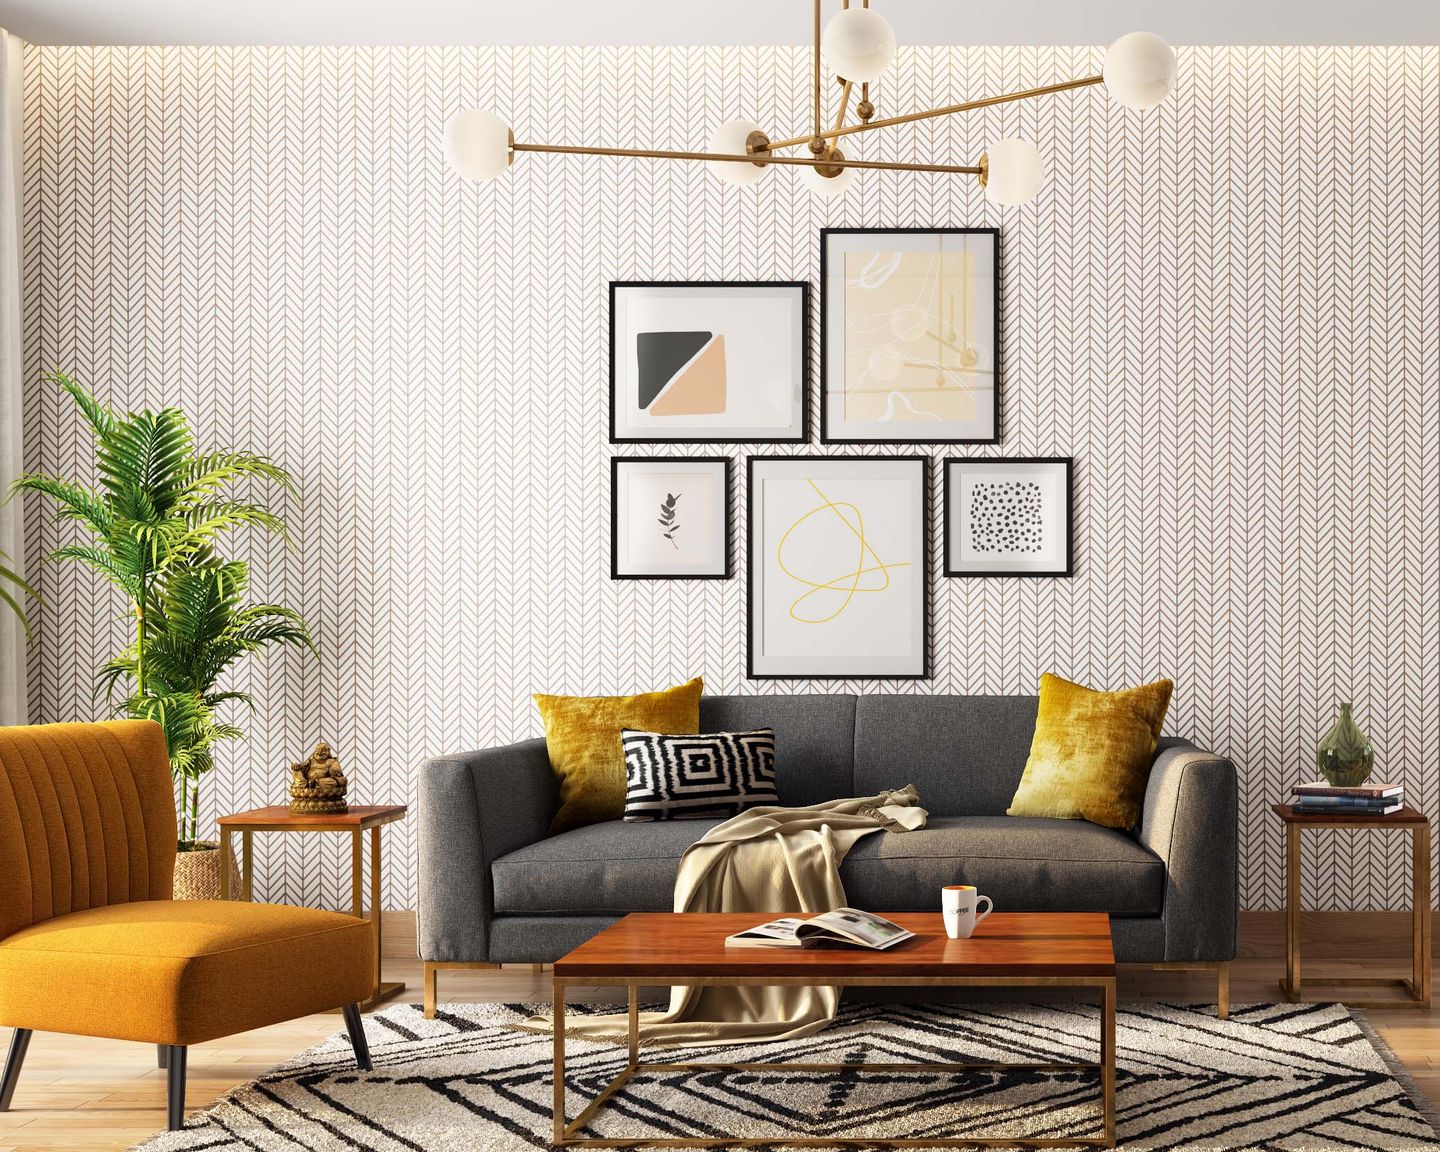 Geometric Brown And Cream Living Room Wallpaper Design - Livspace